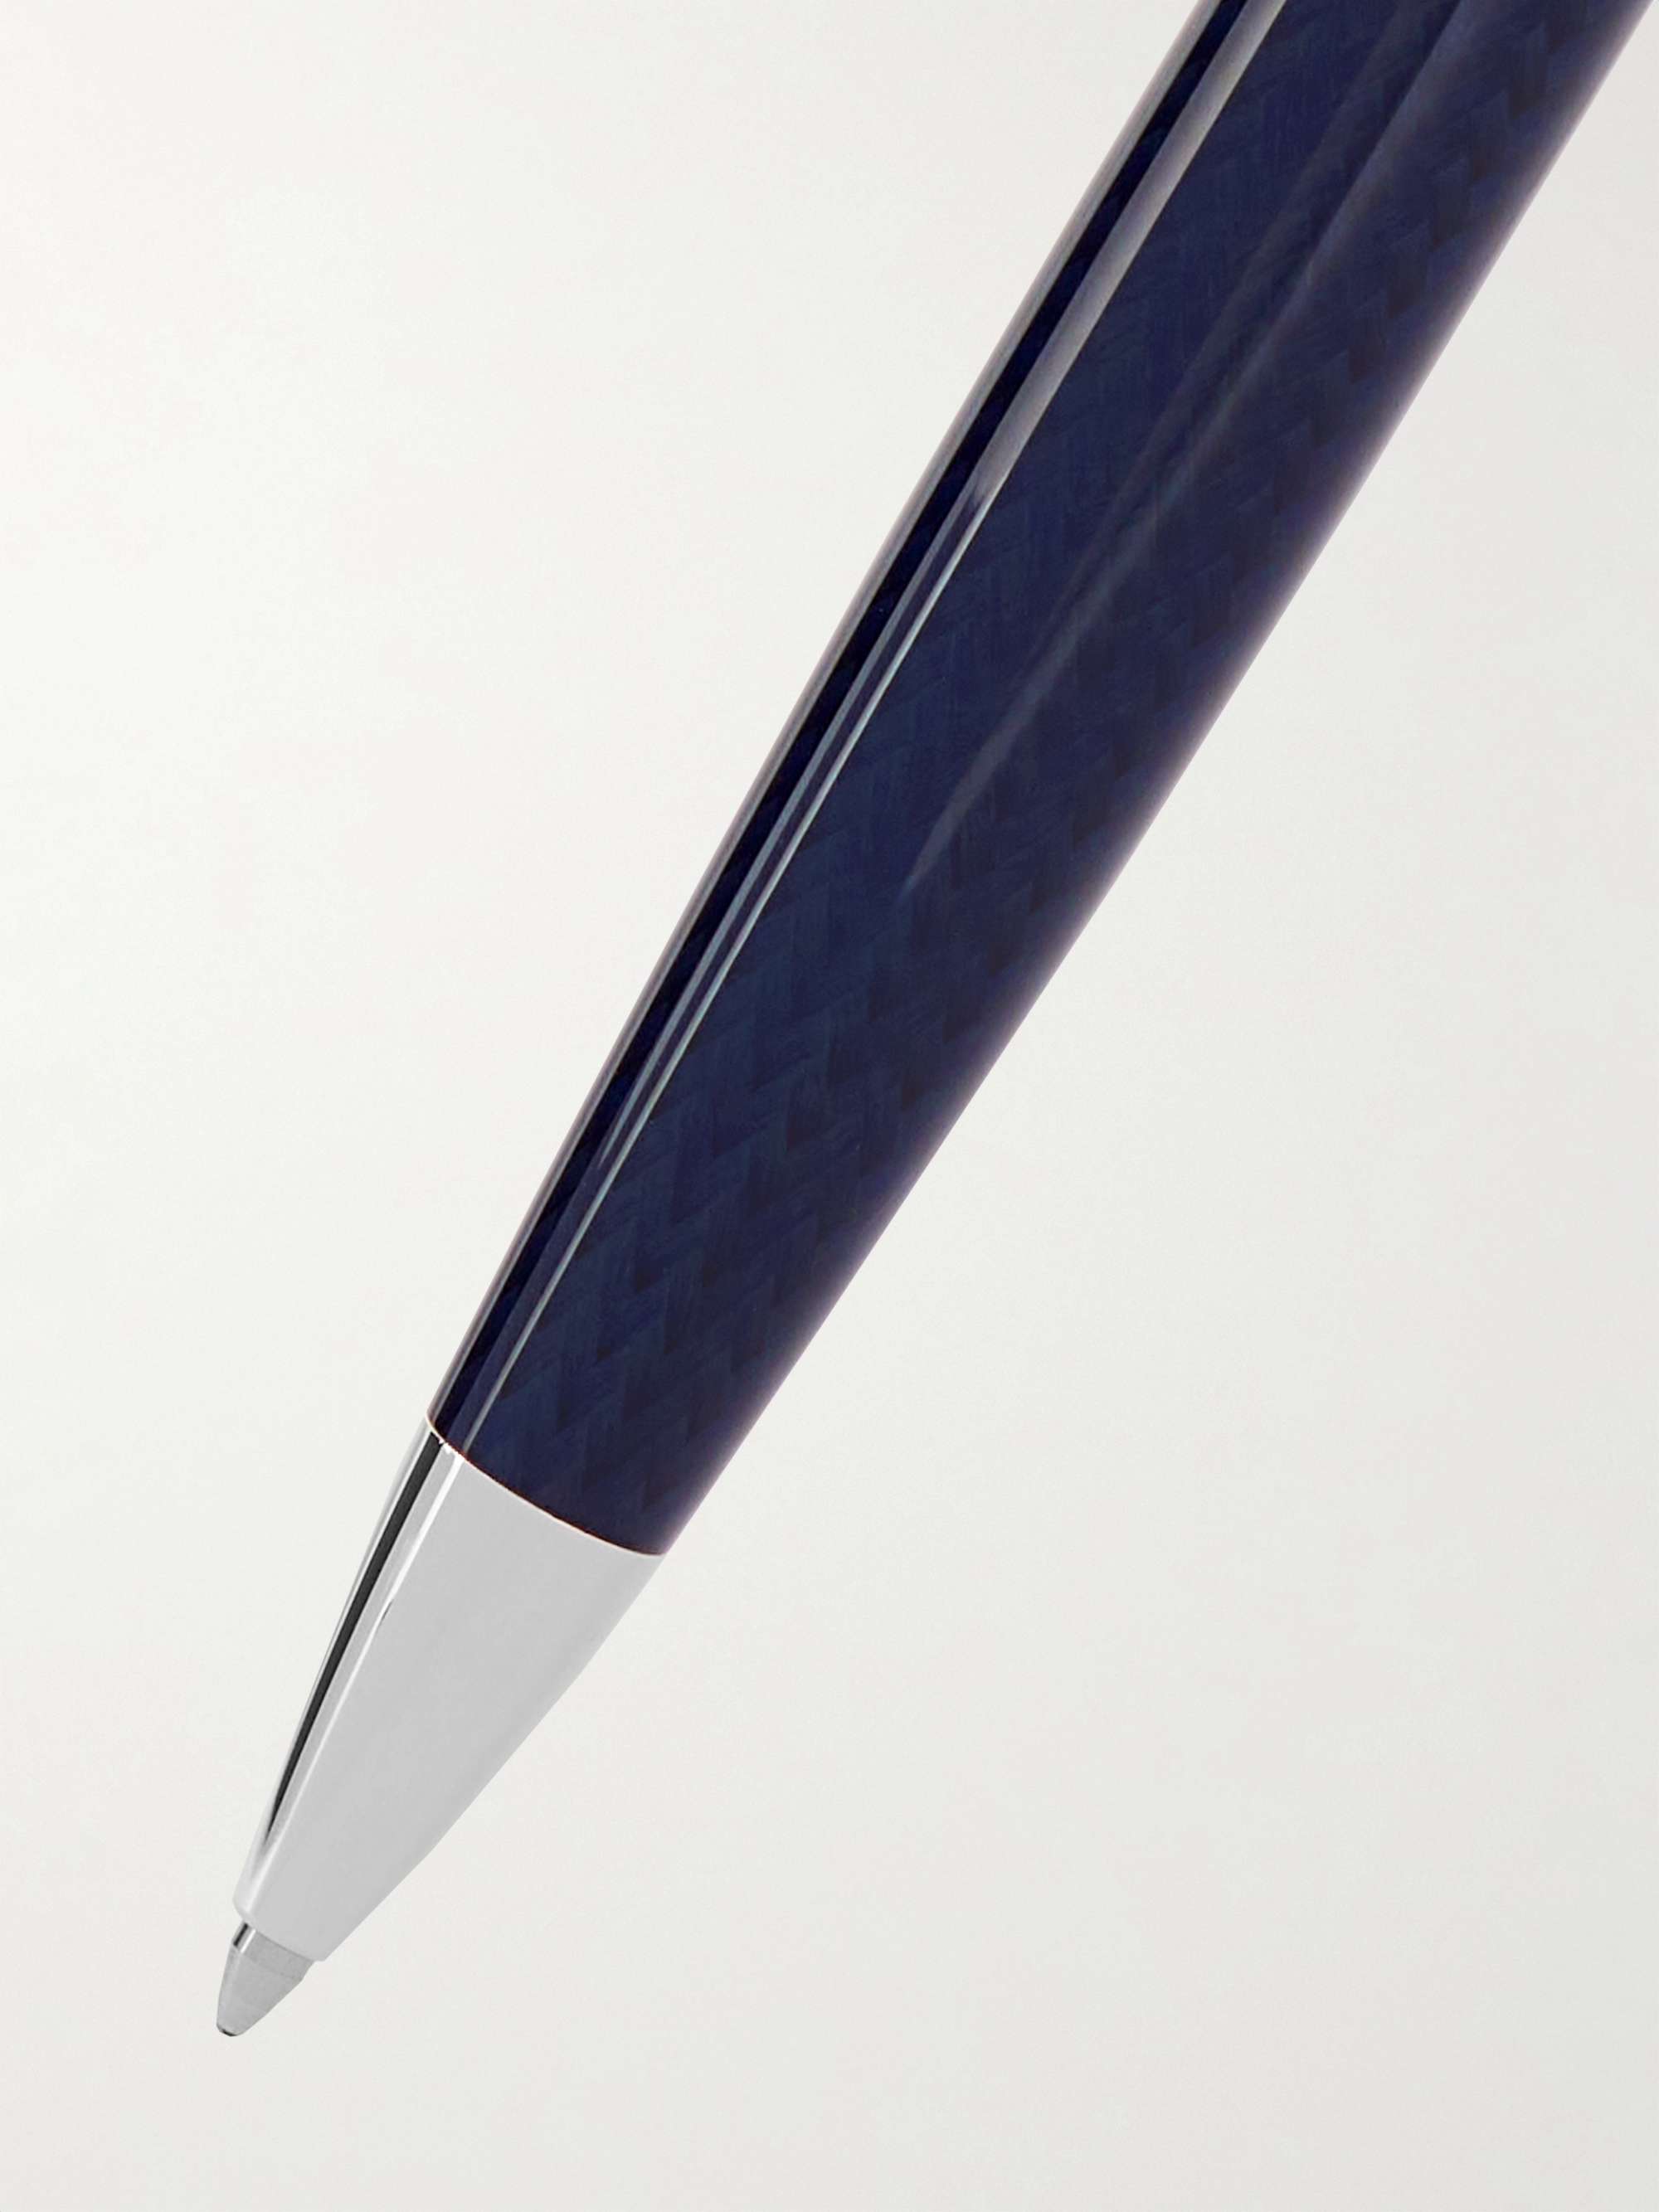 CHOPARD Mille Migla Carbon Fibre and Palladium Ballpoint Pen